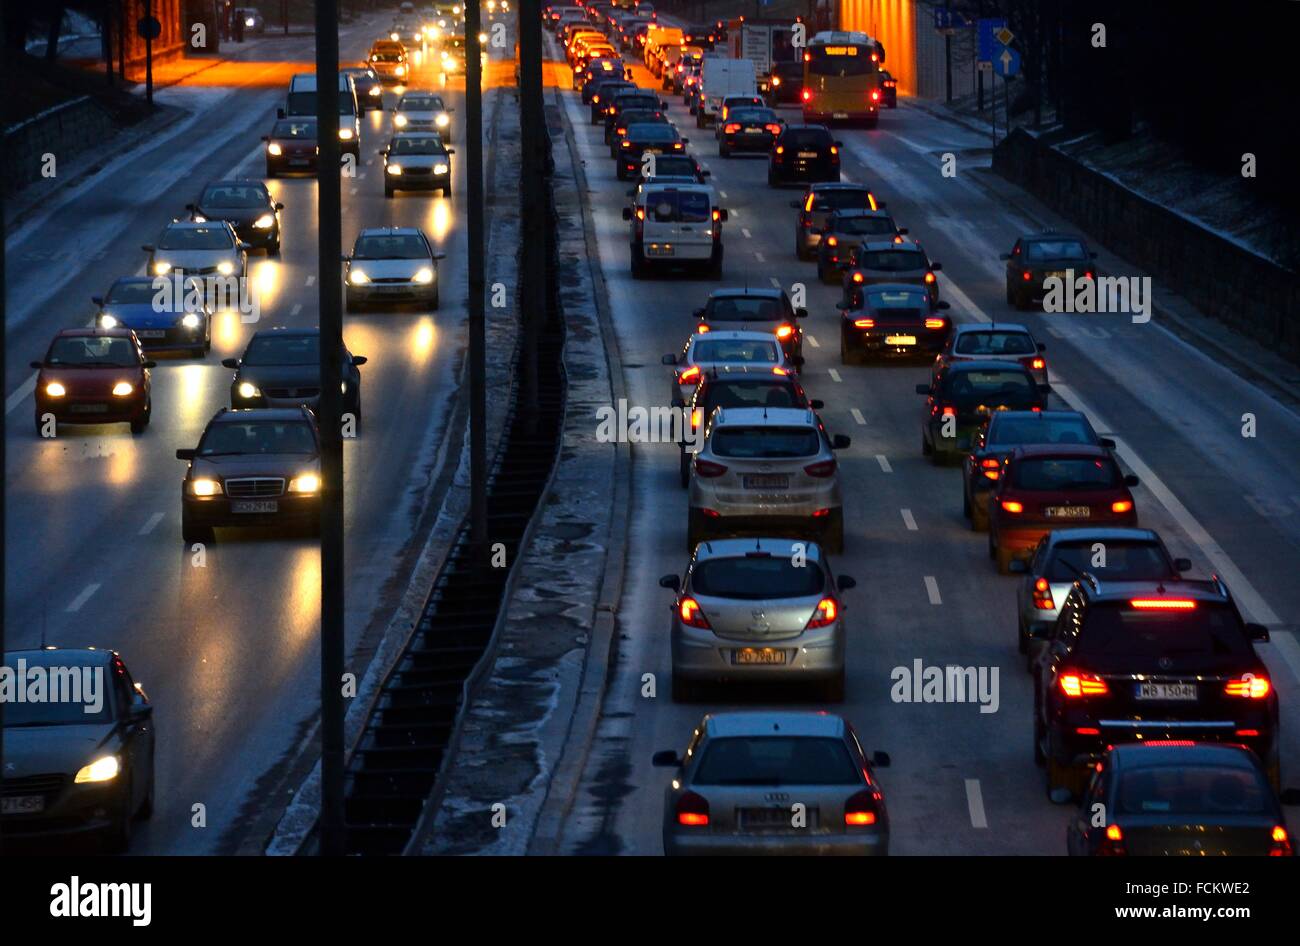 Europe, Poland, Warsaw, traffic at city center at night Stock Photo